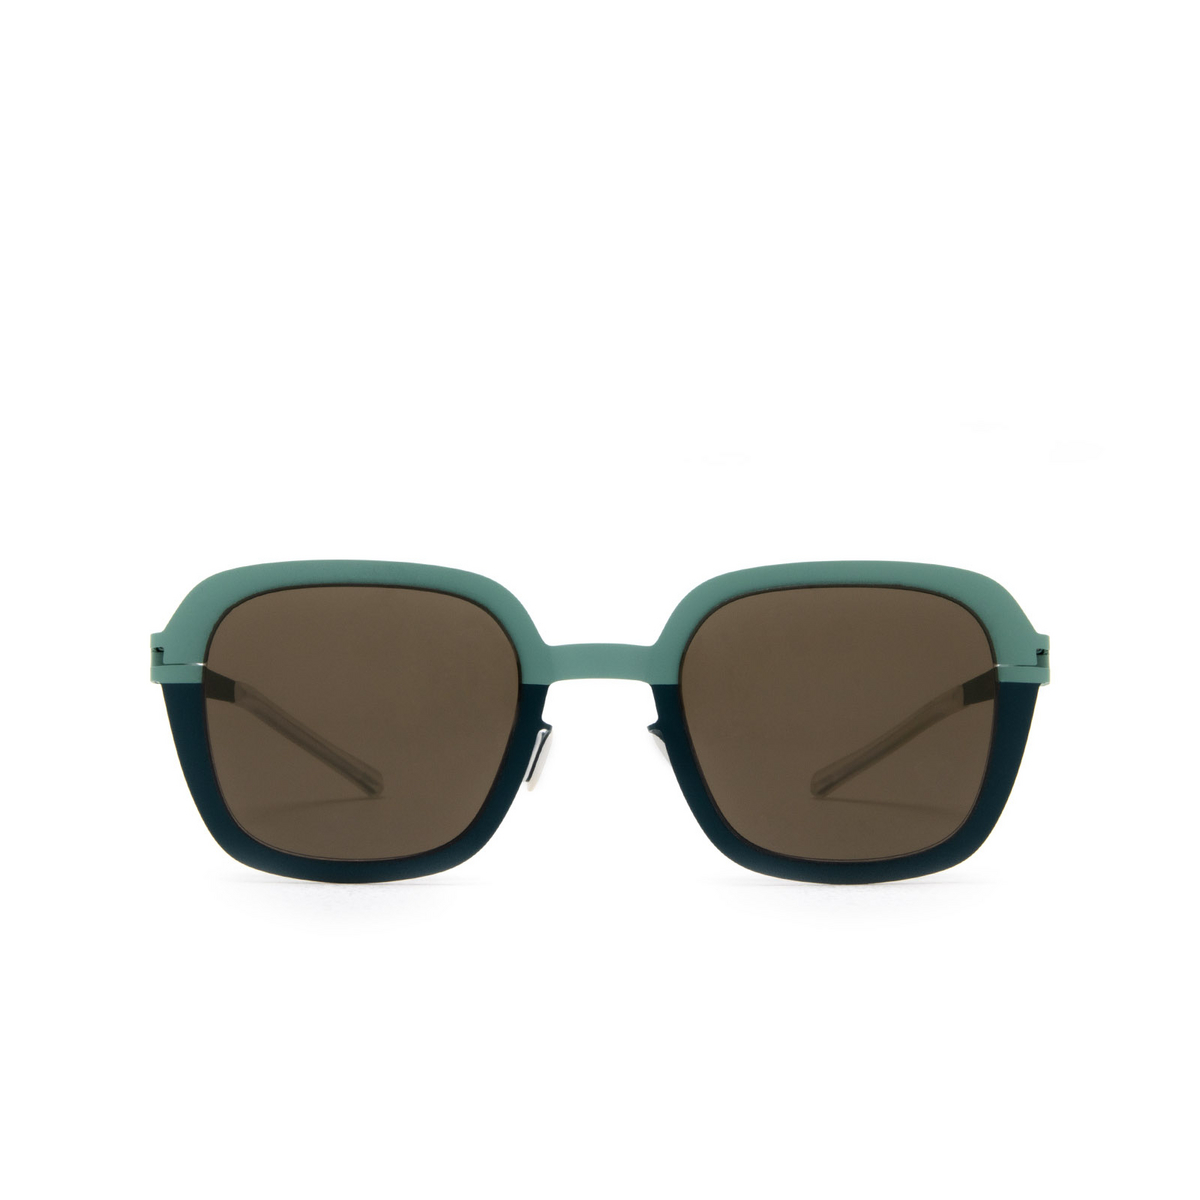 Mykita PALOMA SUN Sunglasses 605 Green/Lagoon Green - front view